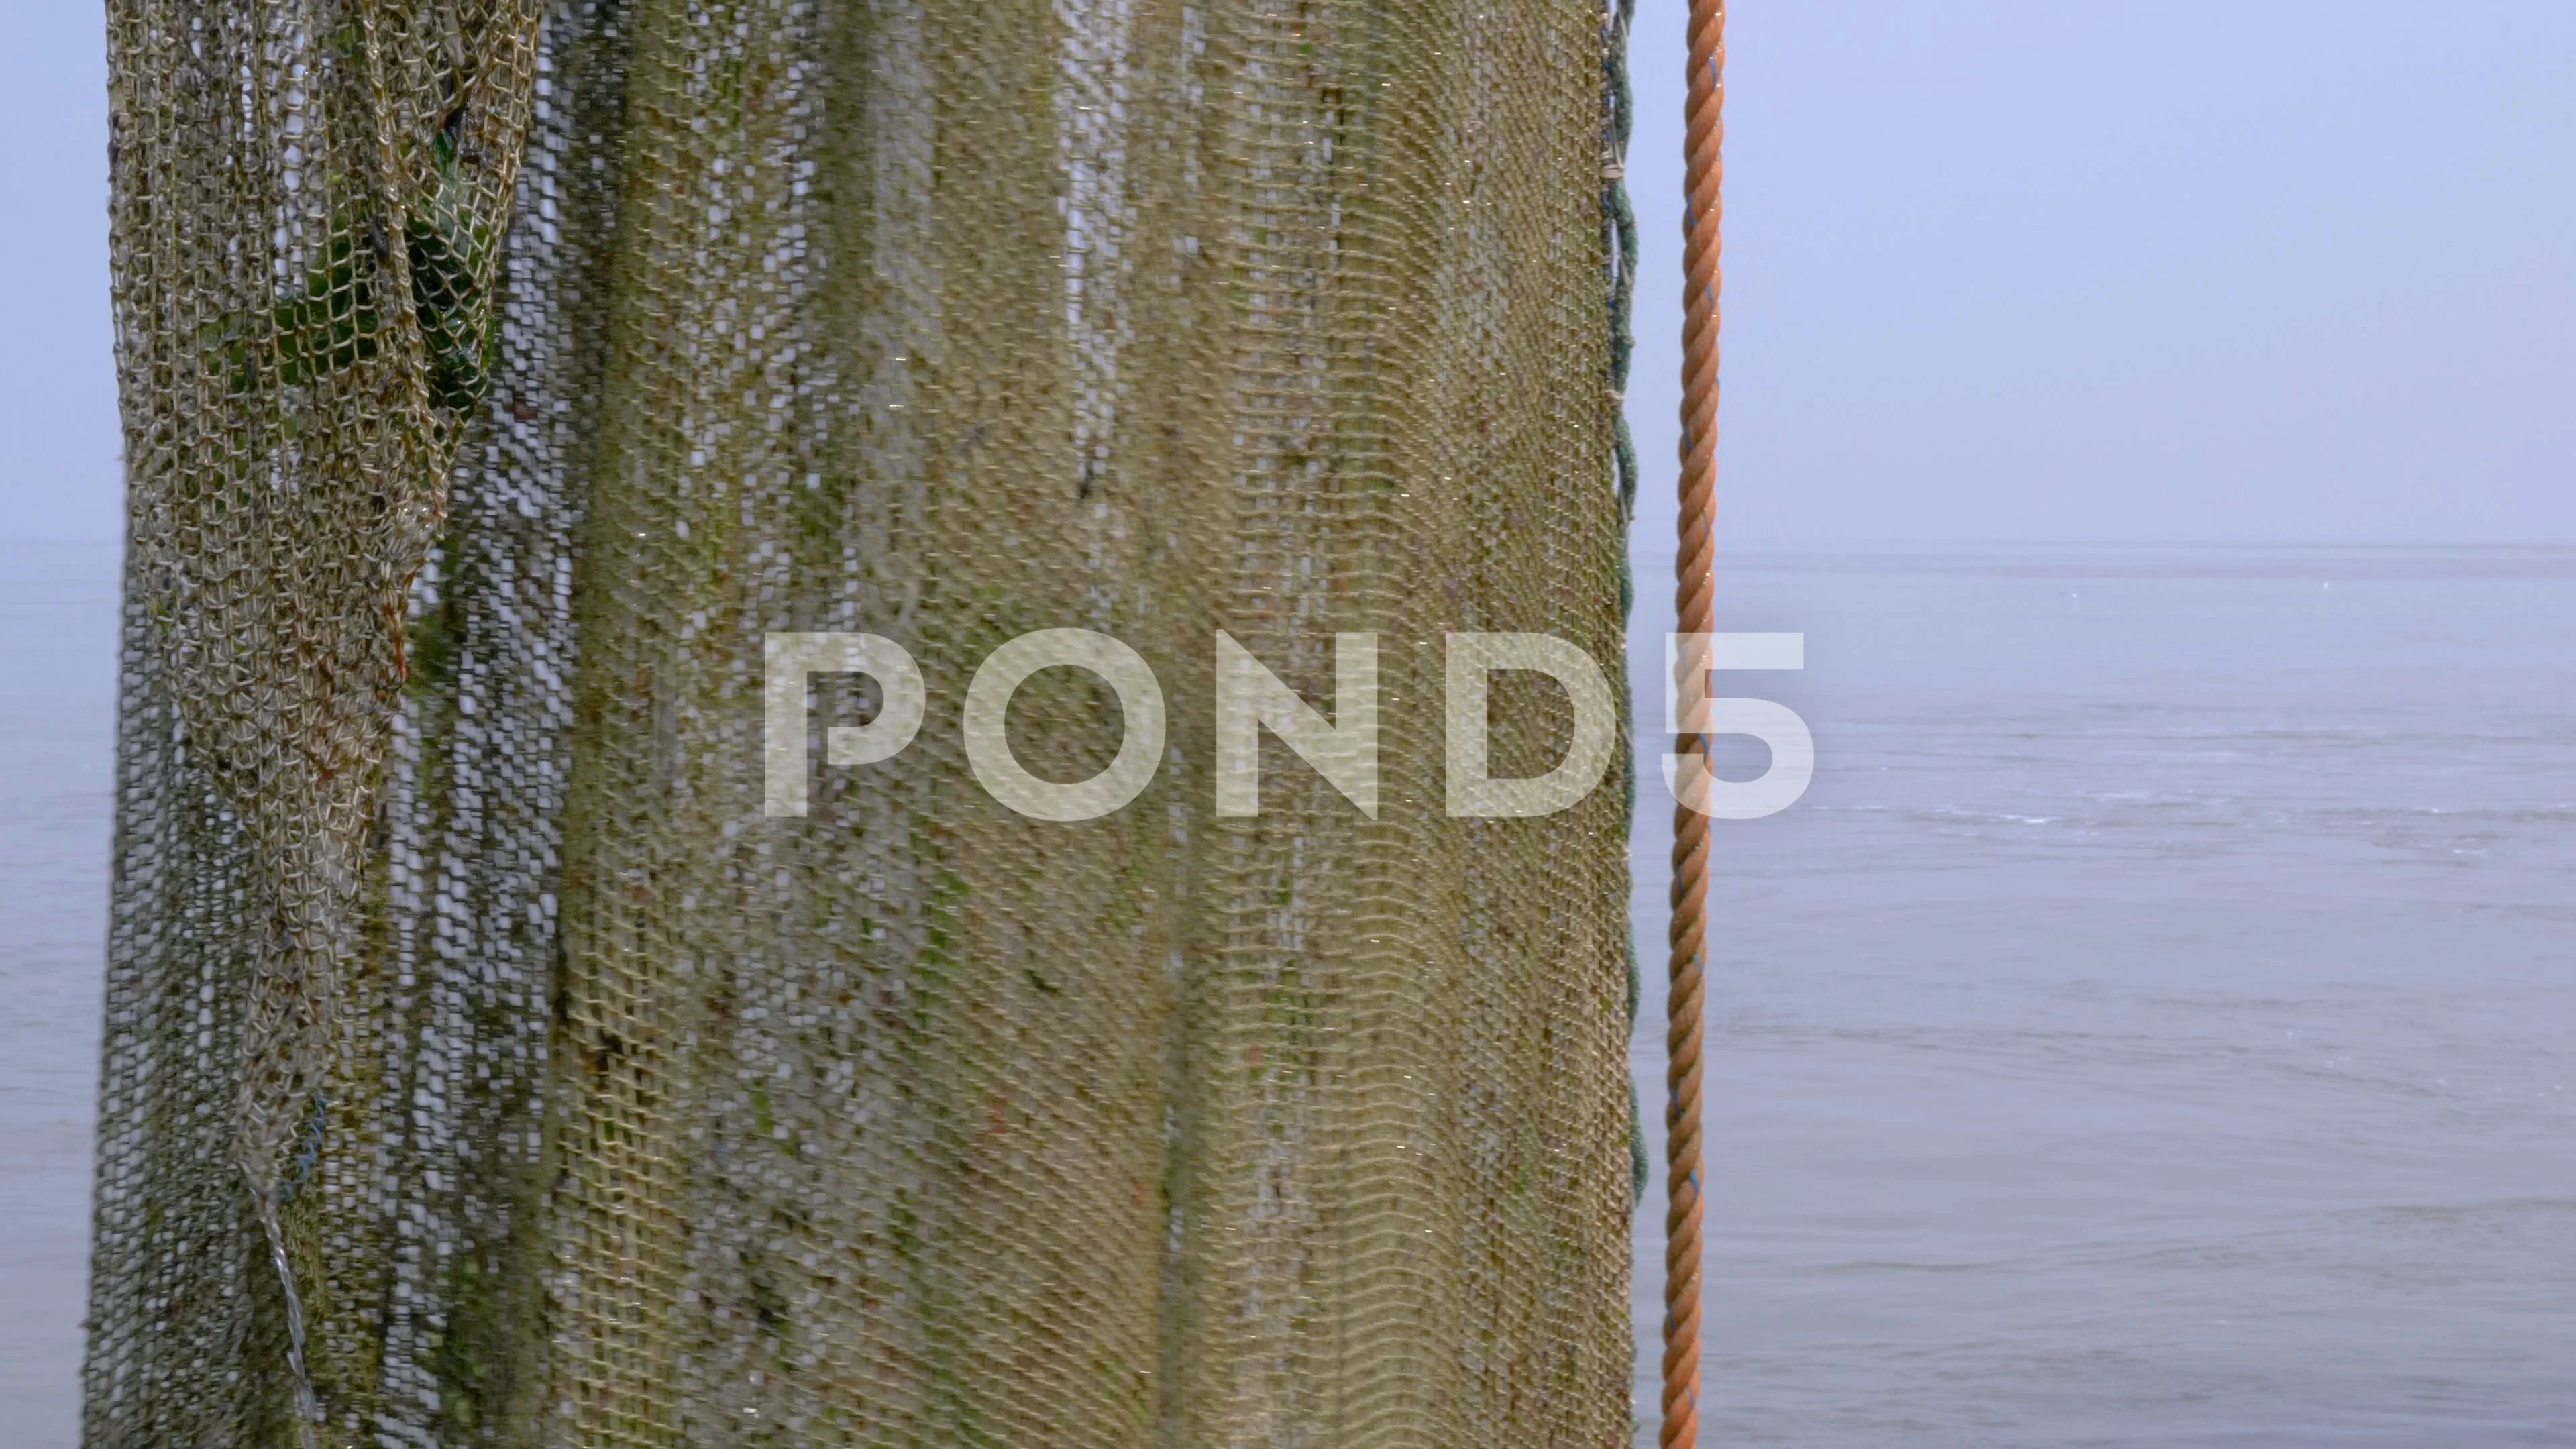 https://images.pond5.com/large-fishing-net-slowly-swinging-114008748_prevstill.jpeg